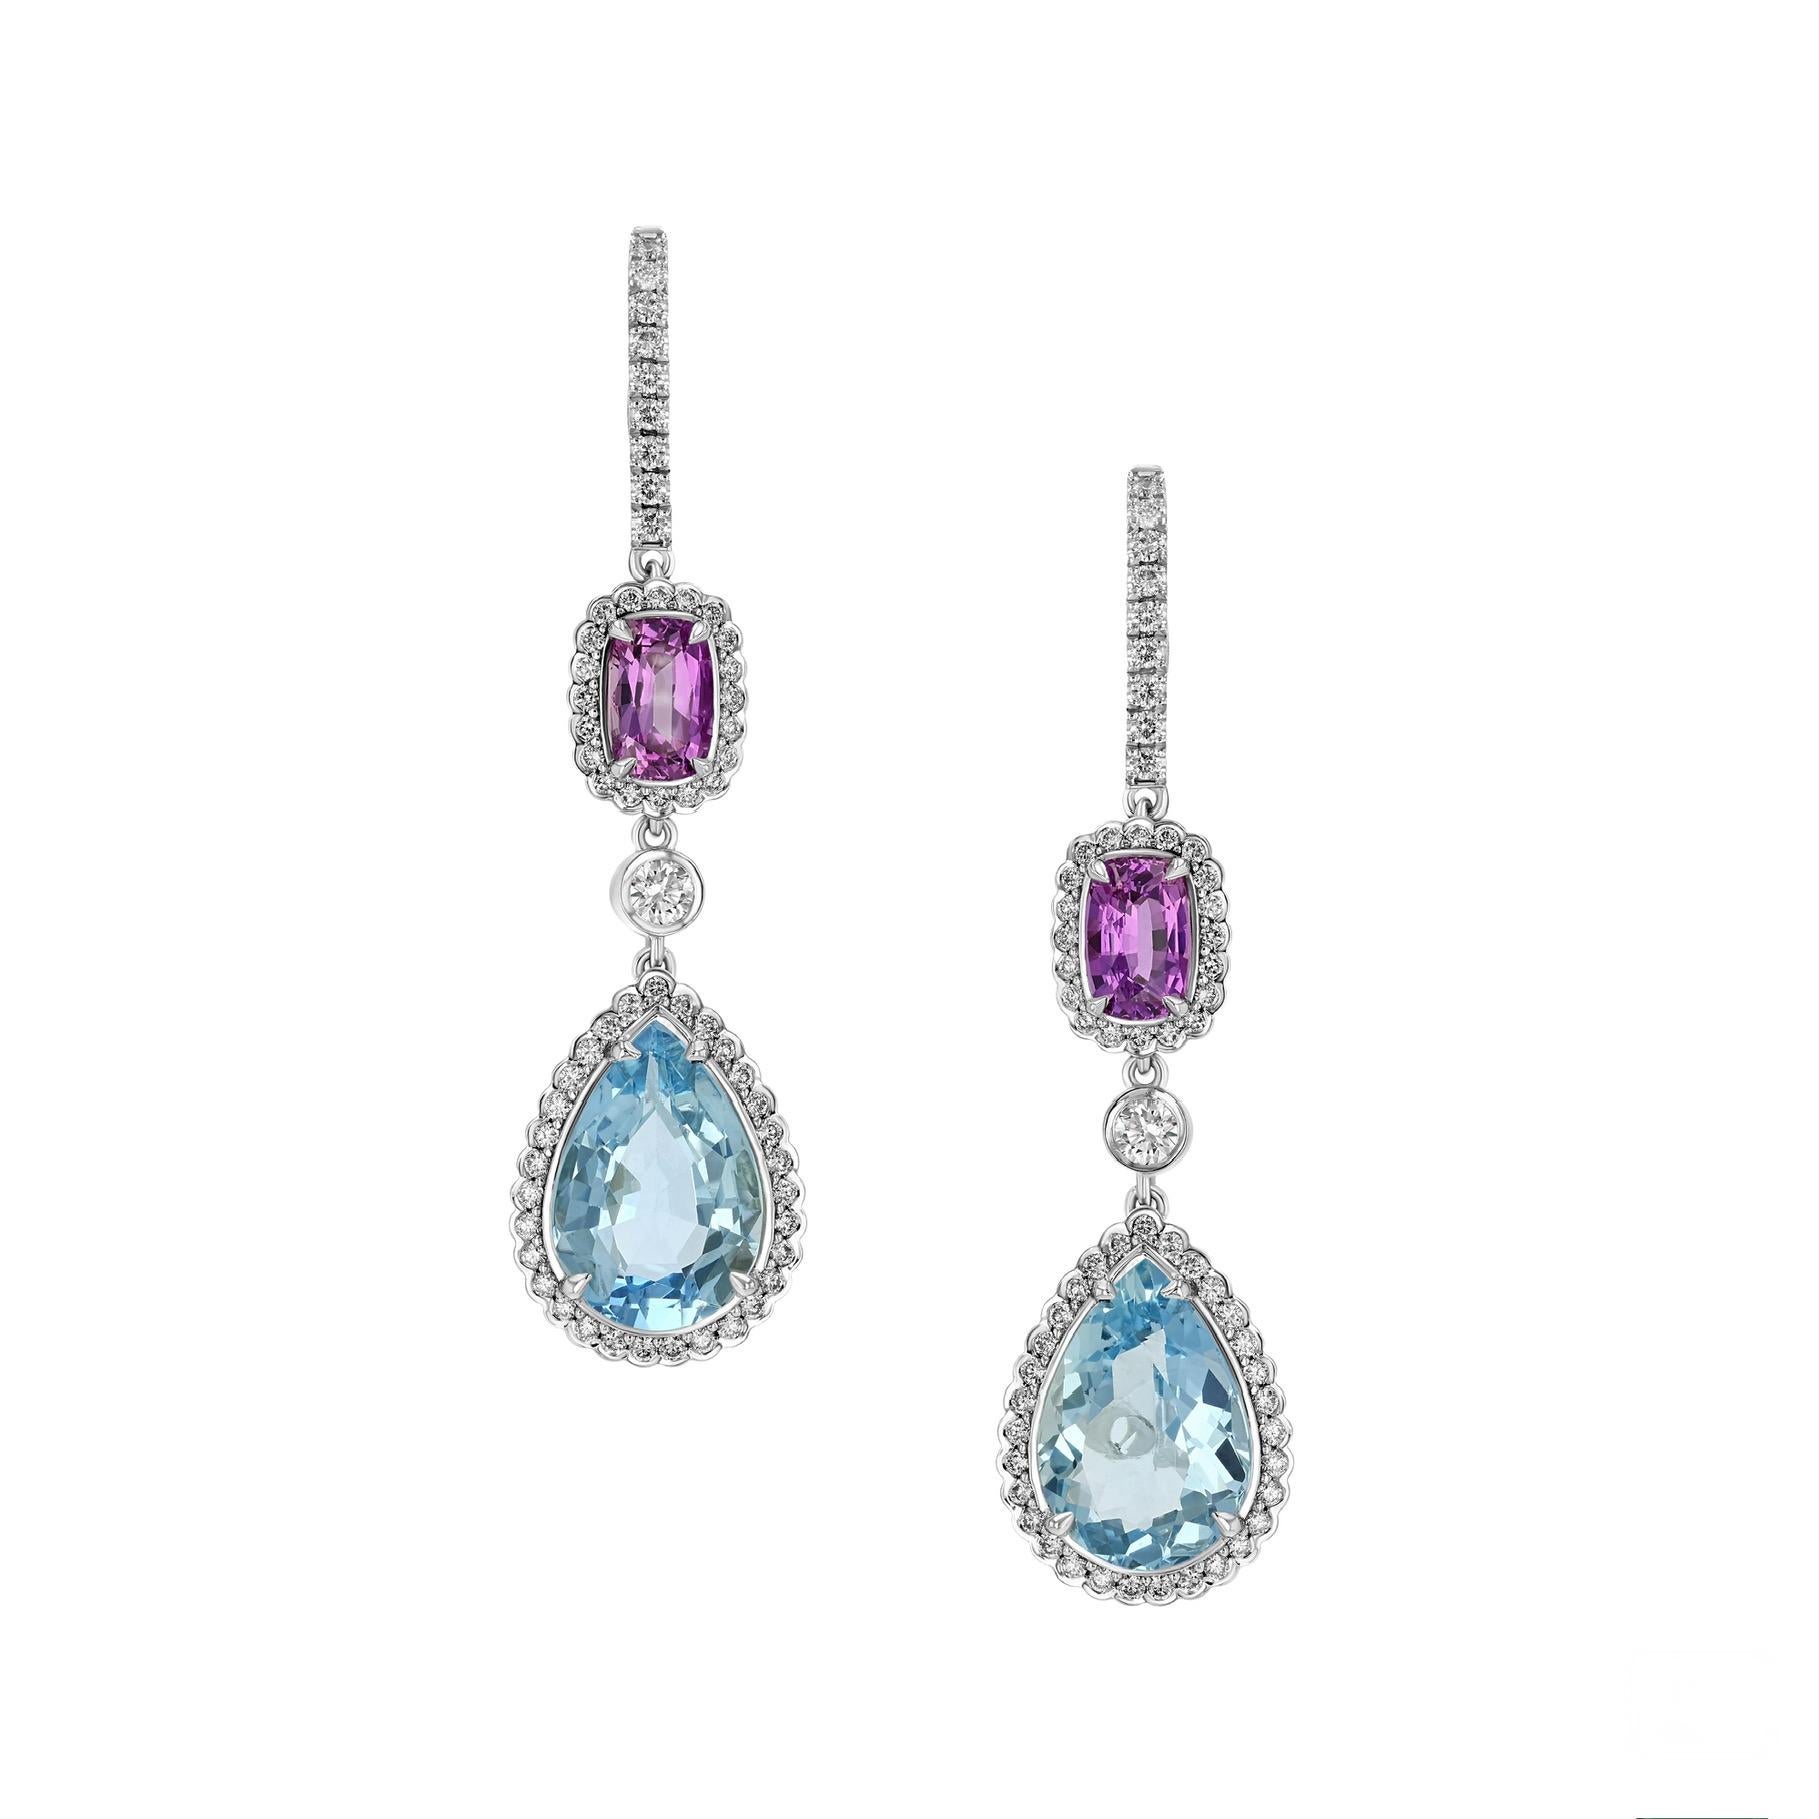 Modern 9.71ct pear-cut Aquamarine, 2.83ct Pink Sapphire, 1.32ct Diamond, 18K earrings. For Sale